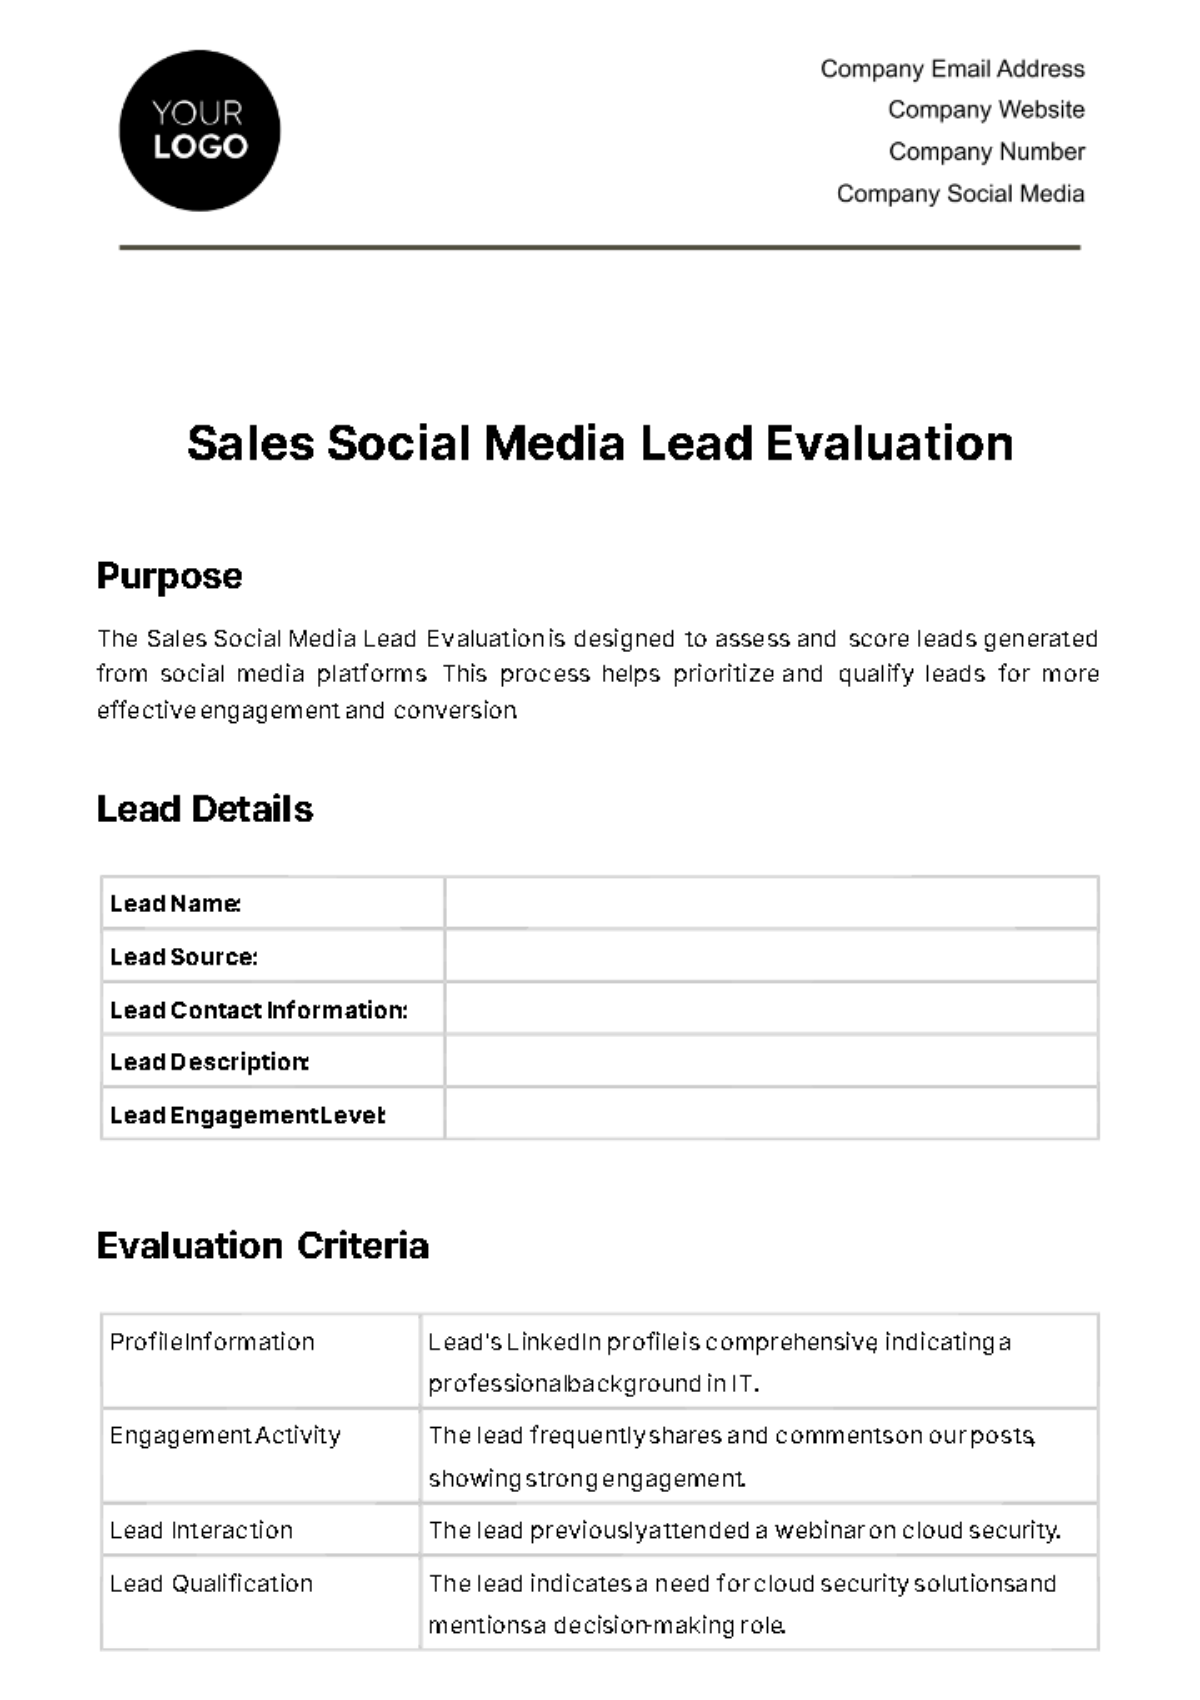 Sales Social Media Lead Evaluation Template